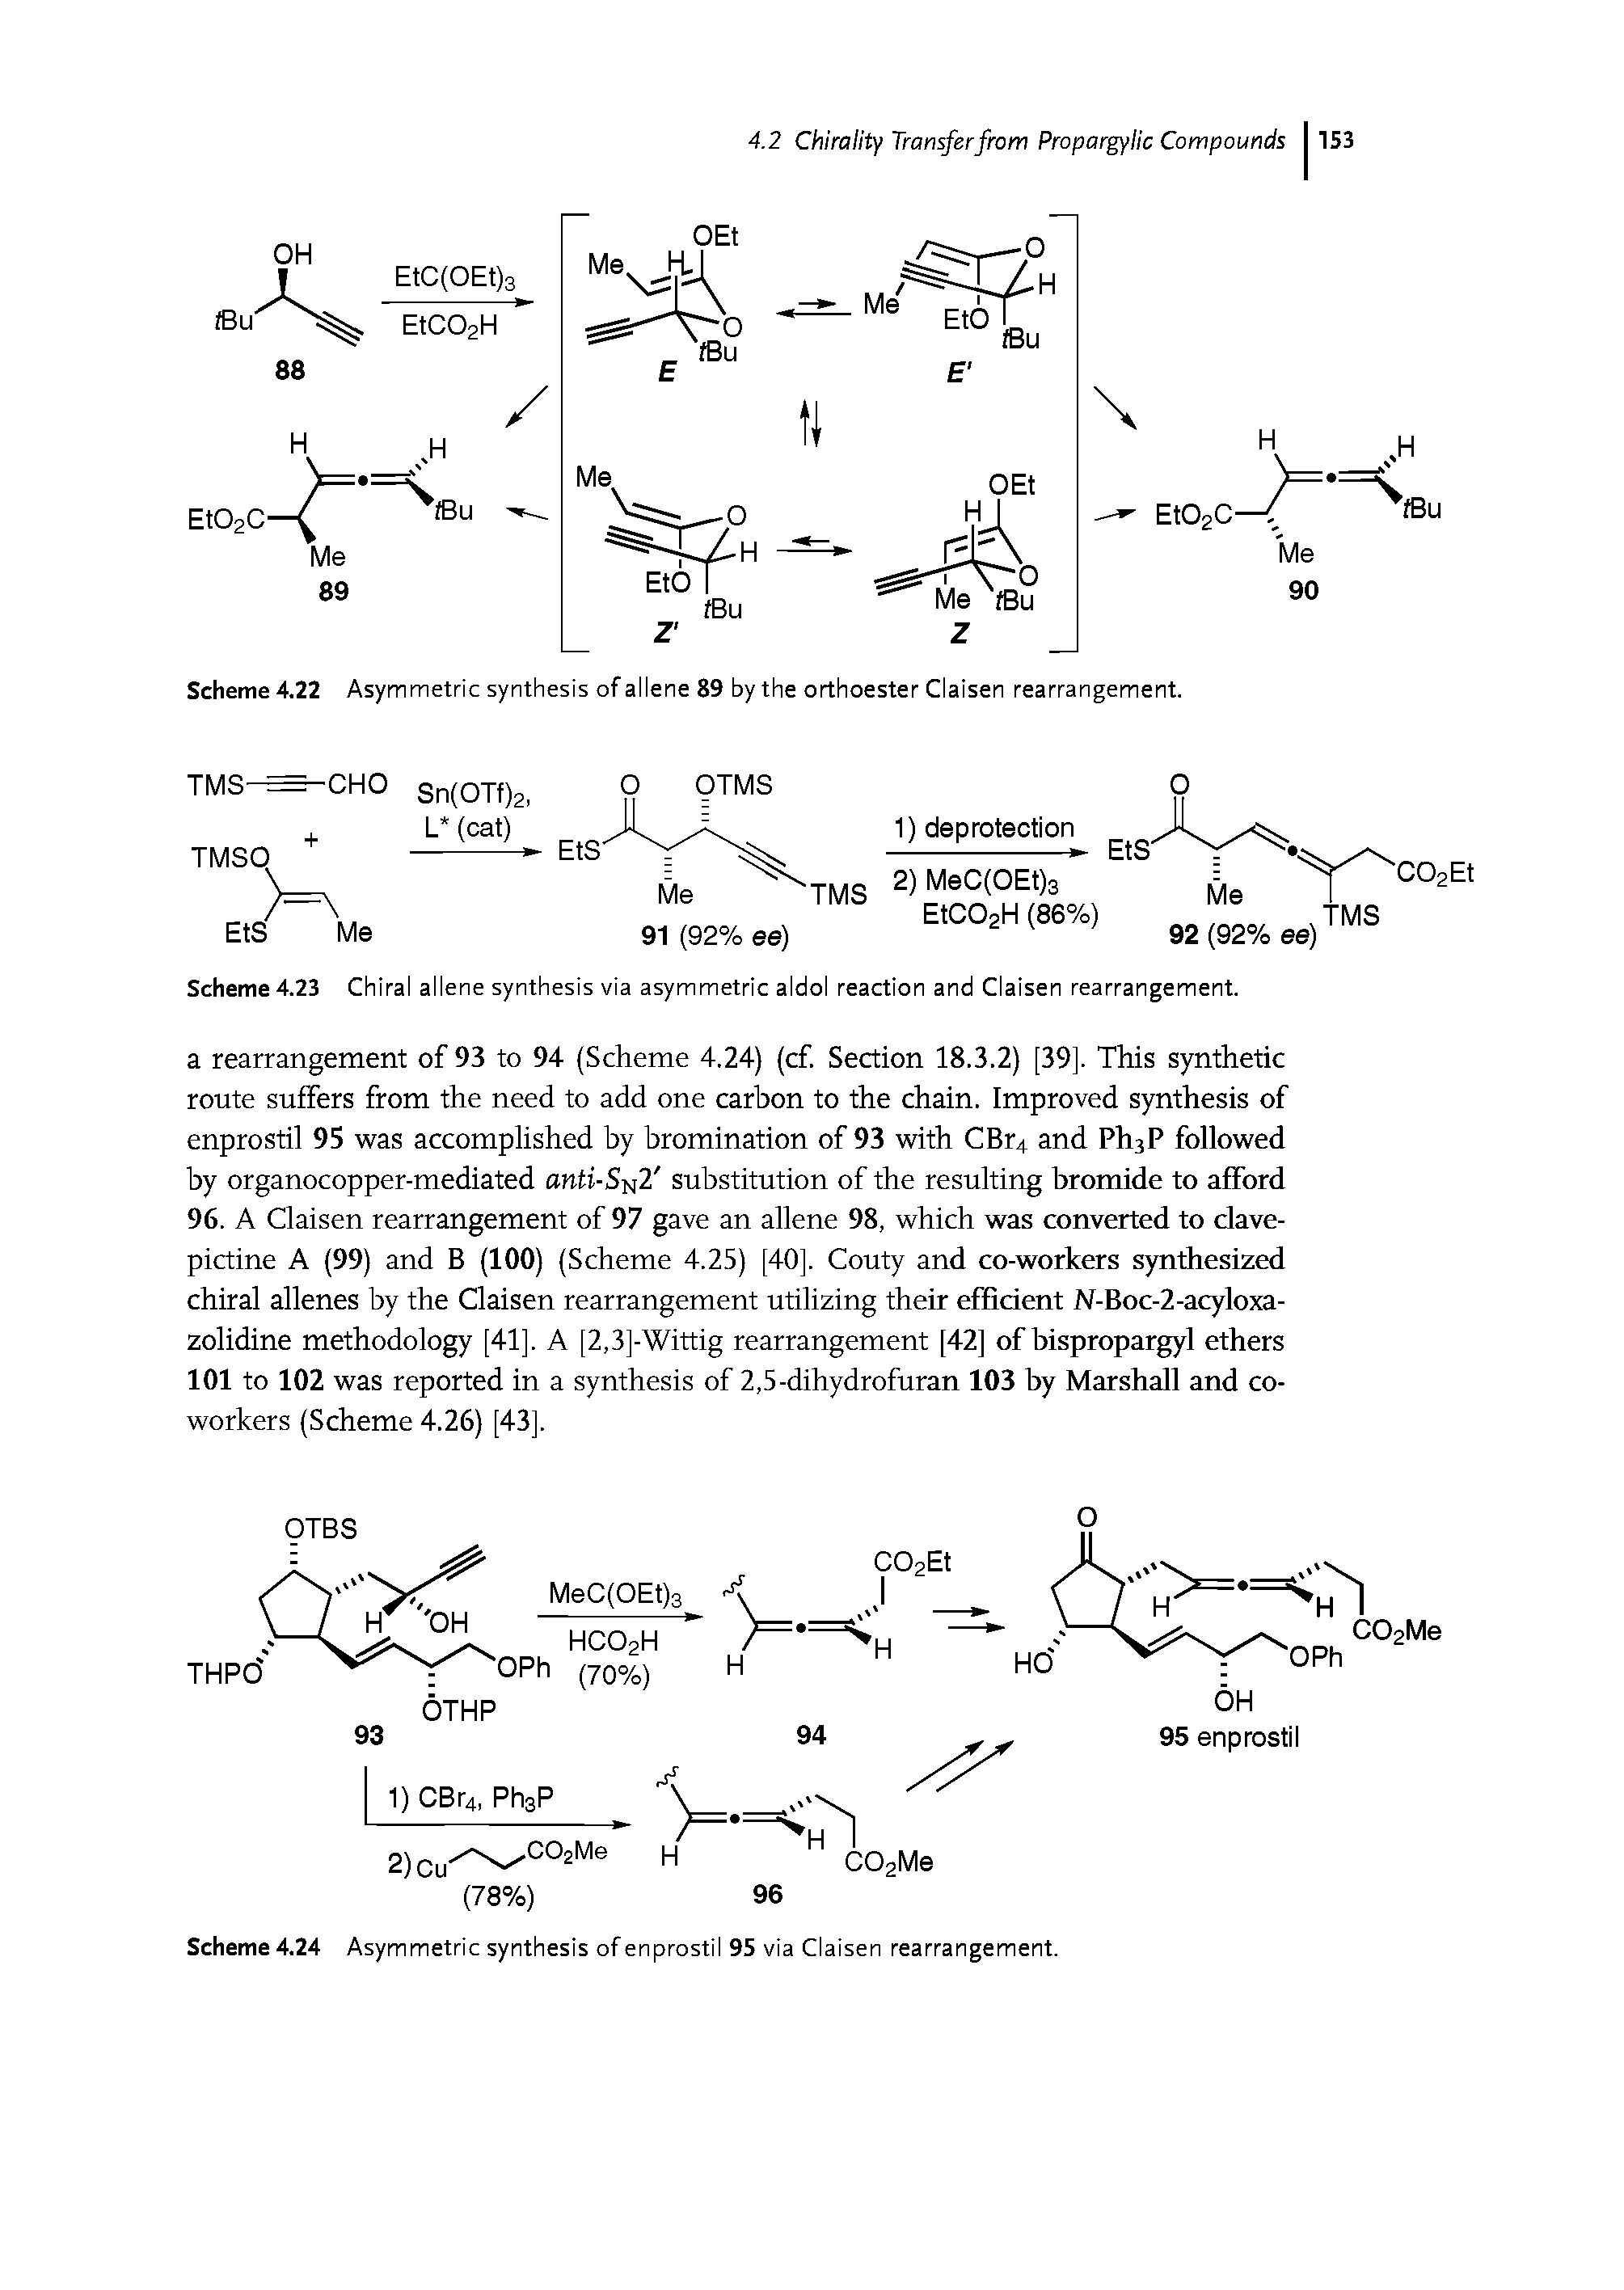 Scheme 4.23 Chiral allene synthesis via asymmetric aldol reaction and Claisen rearrangement.